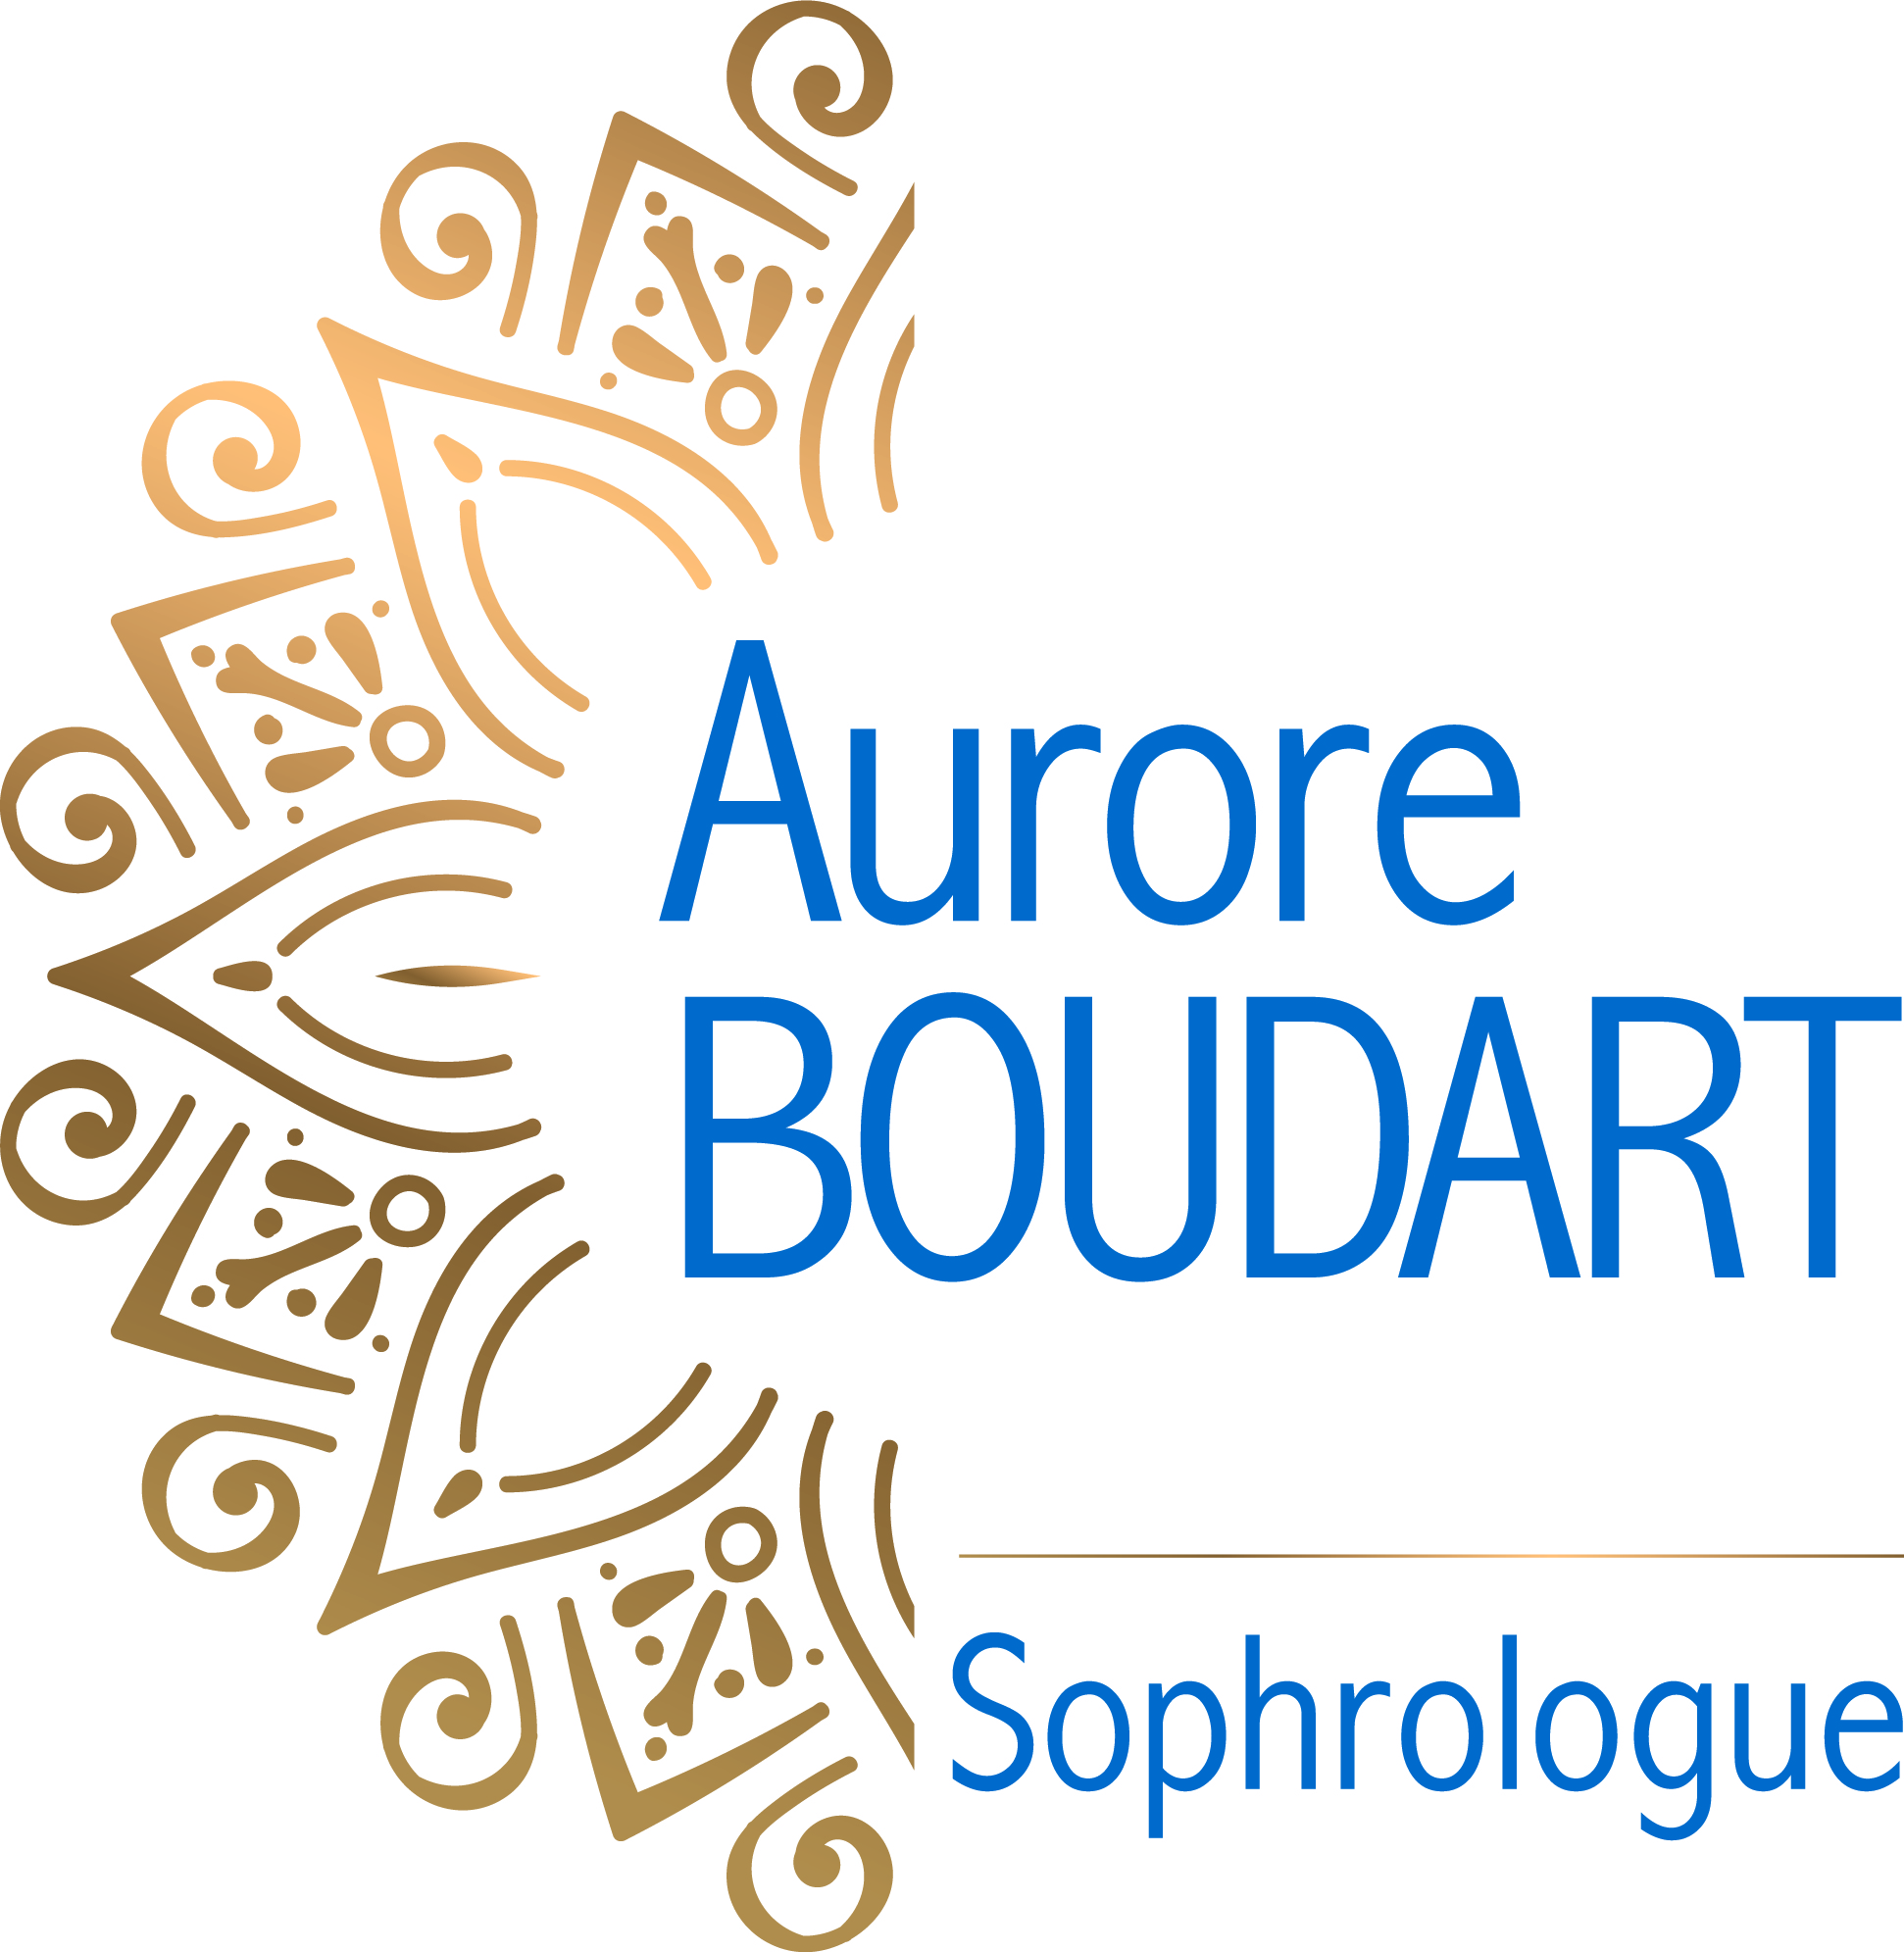 Aurore Boudart